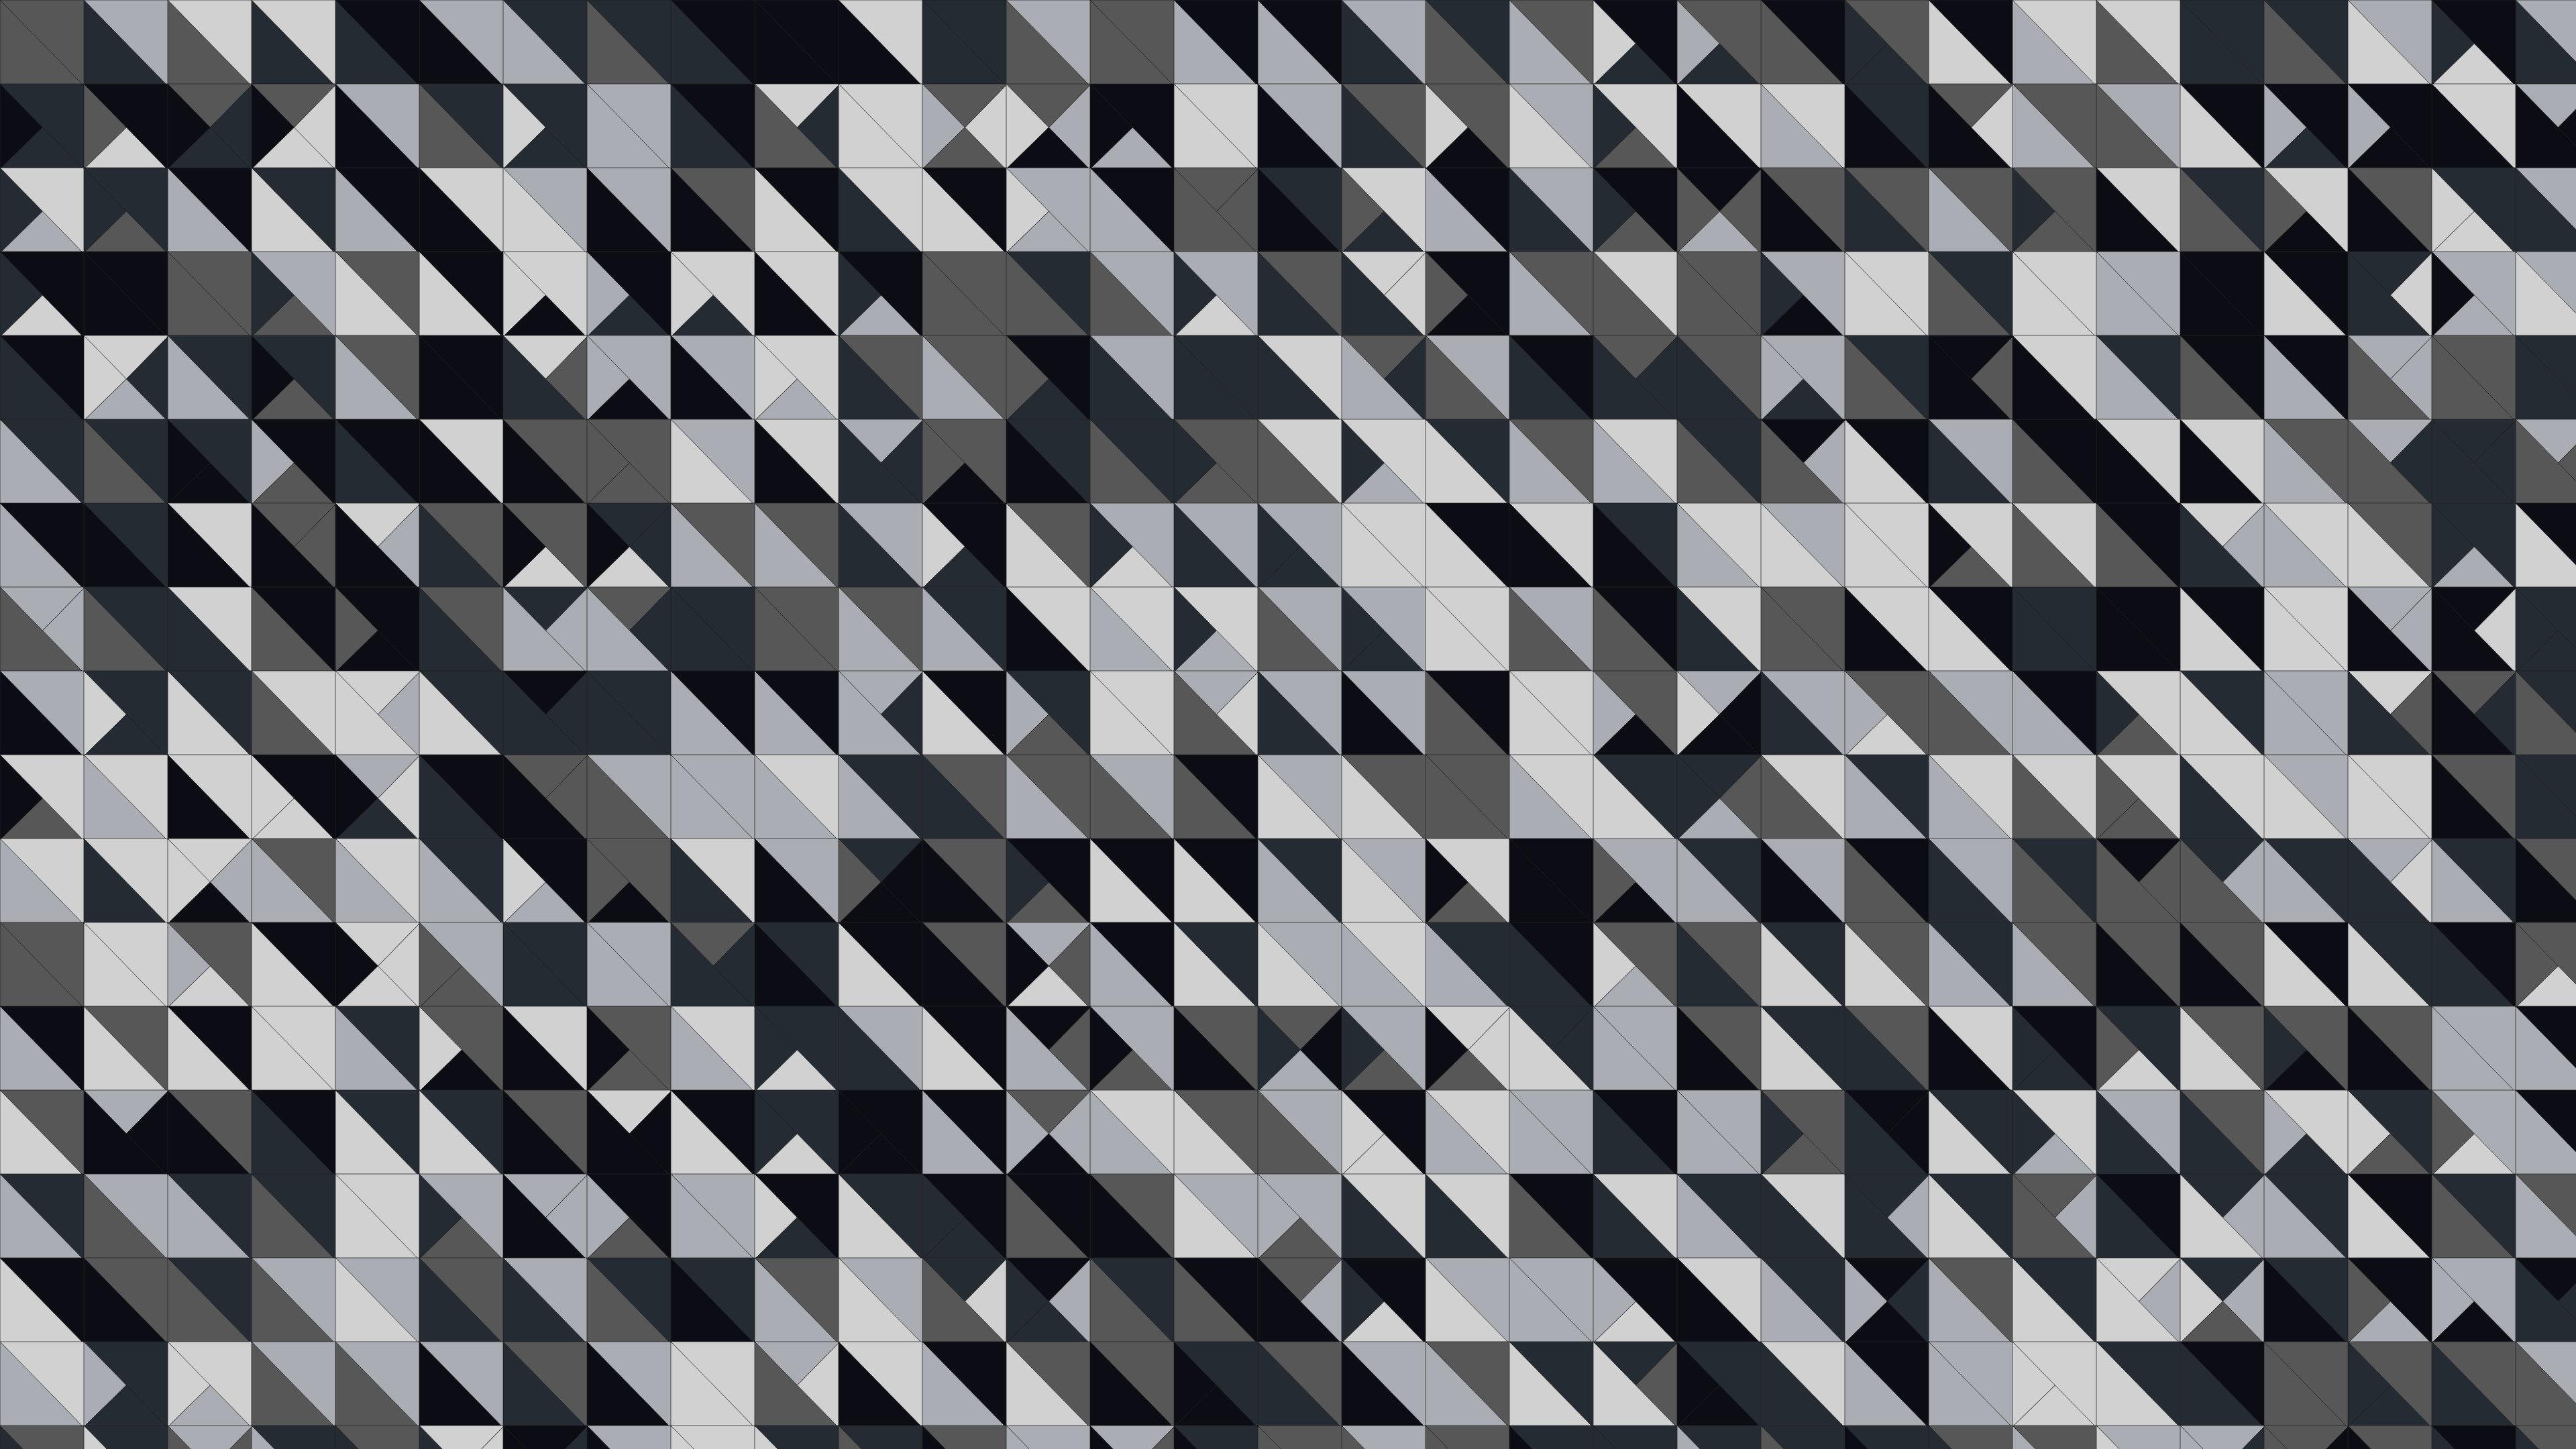 4K-resolution Black and White Logo - High resolution Black and White abstract hd 4k wallpaper ID:130502 ...